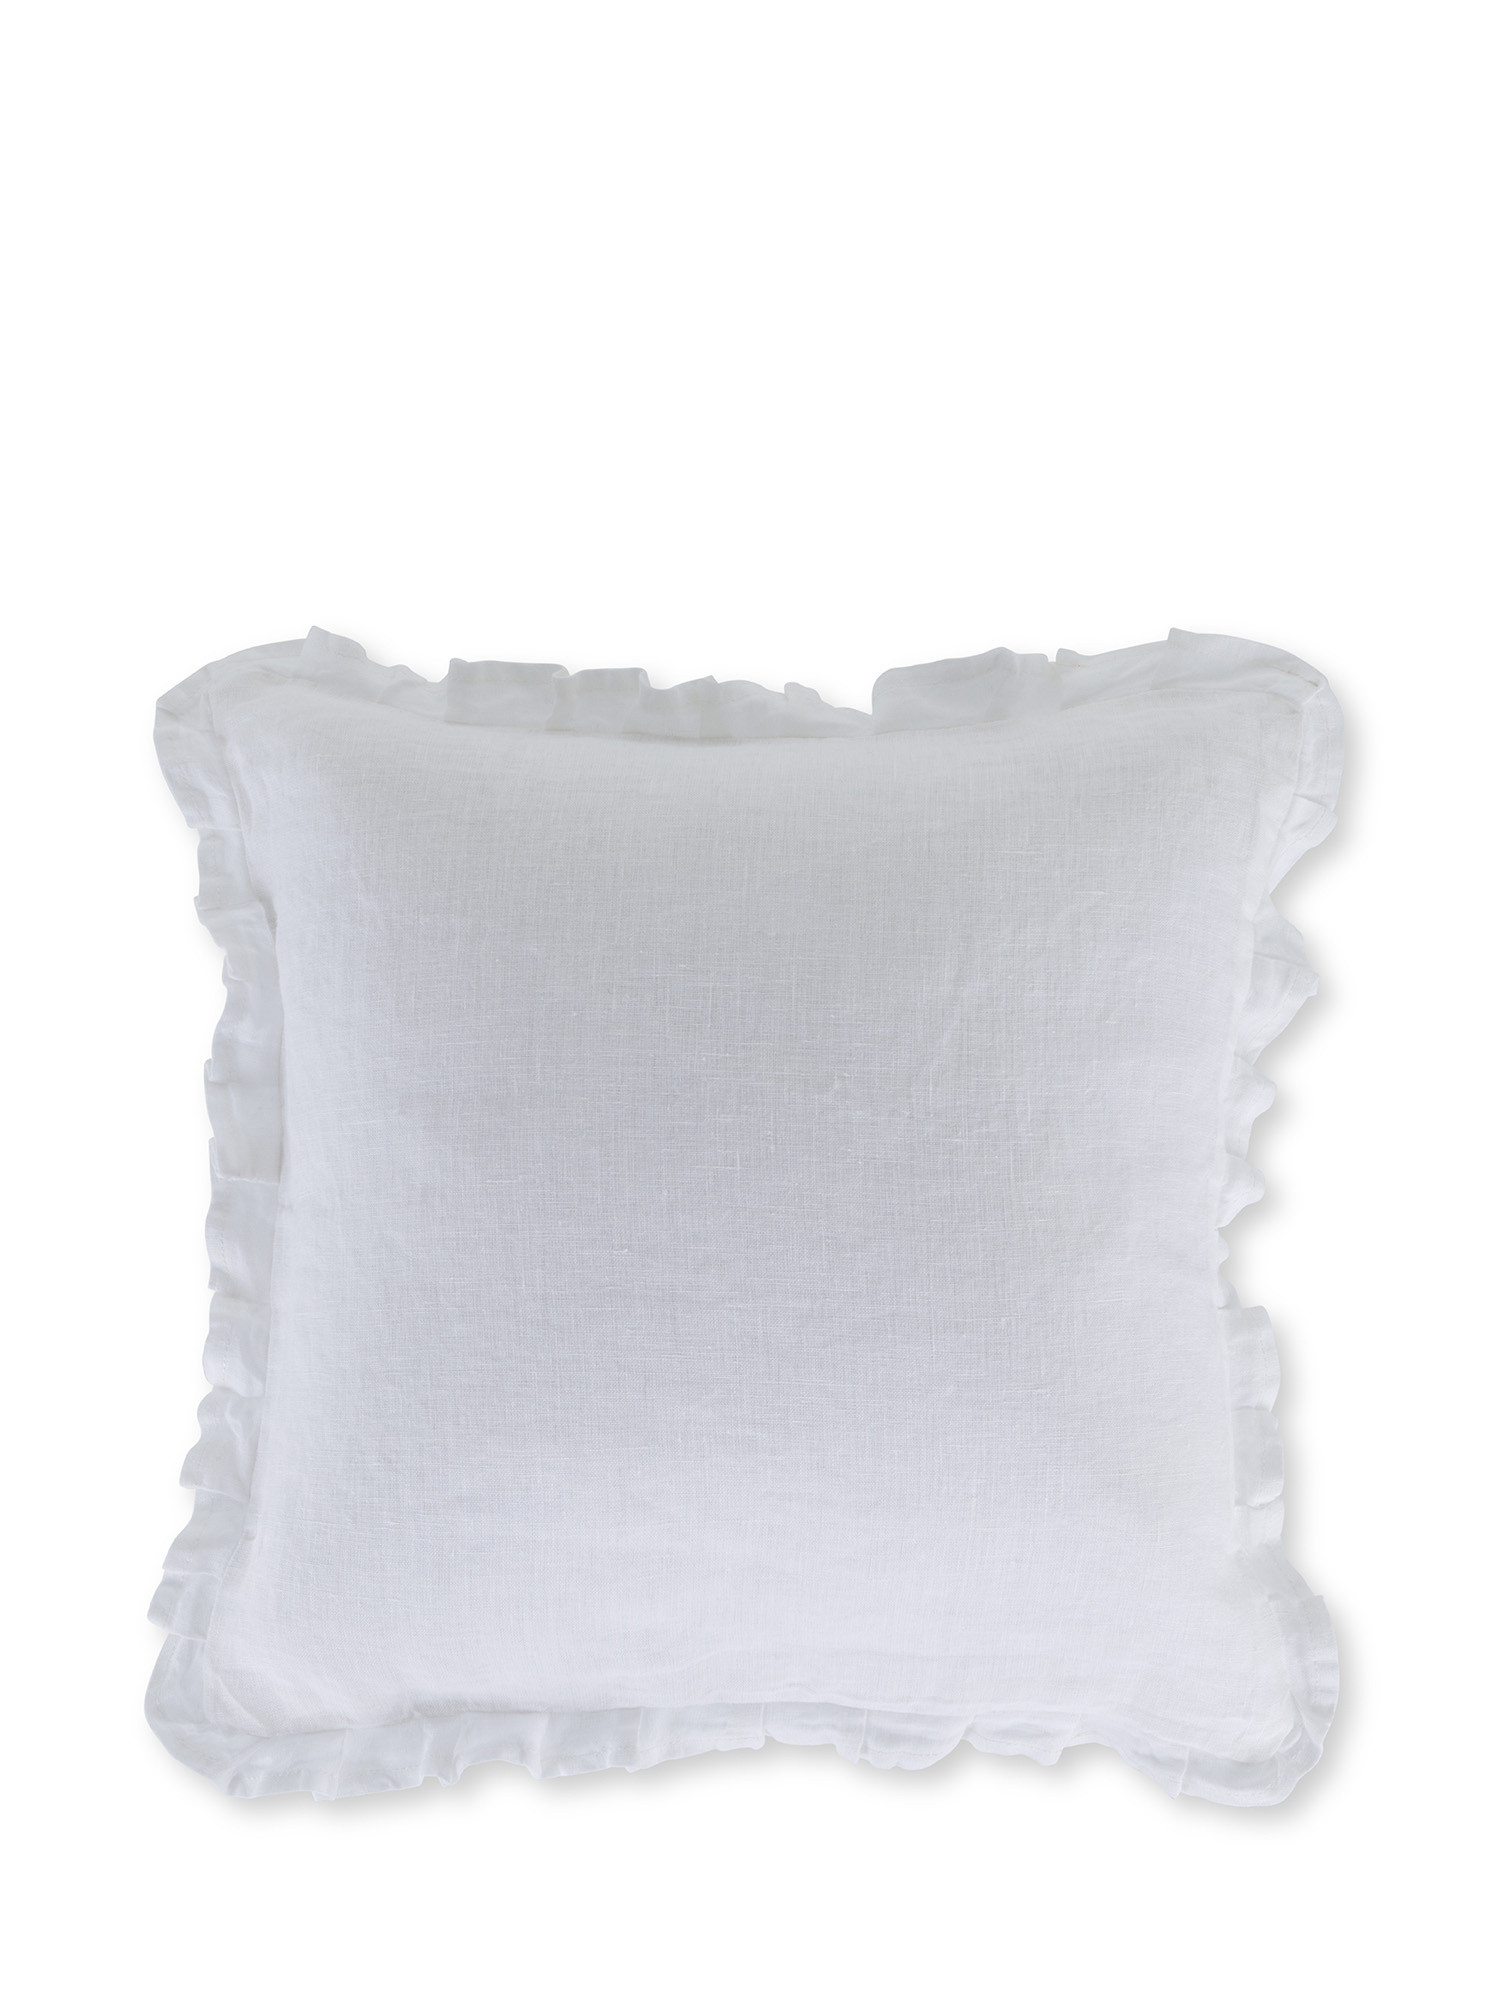 Cuscino rigato in puro lino 40x40 cm, Bianco, large image number 0